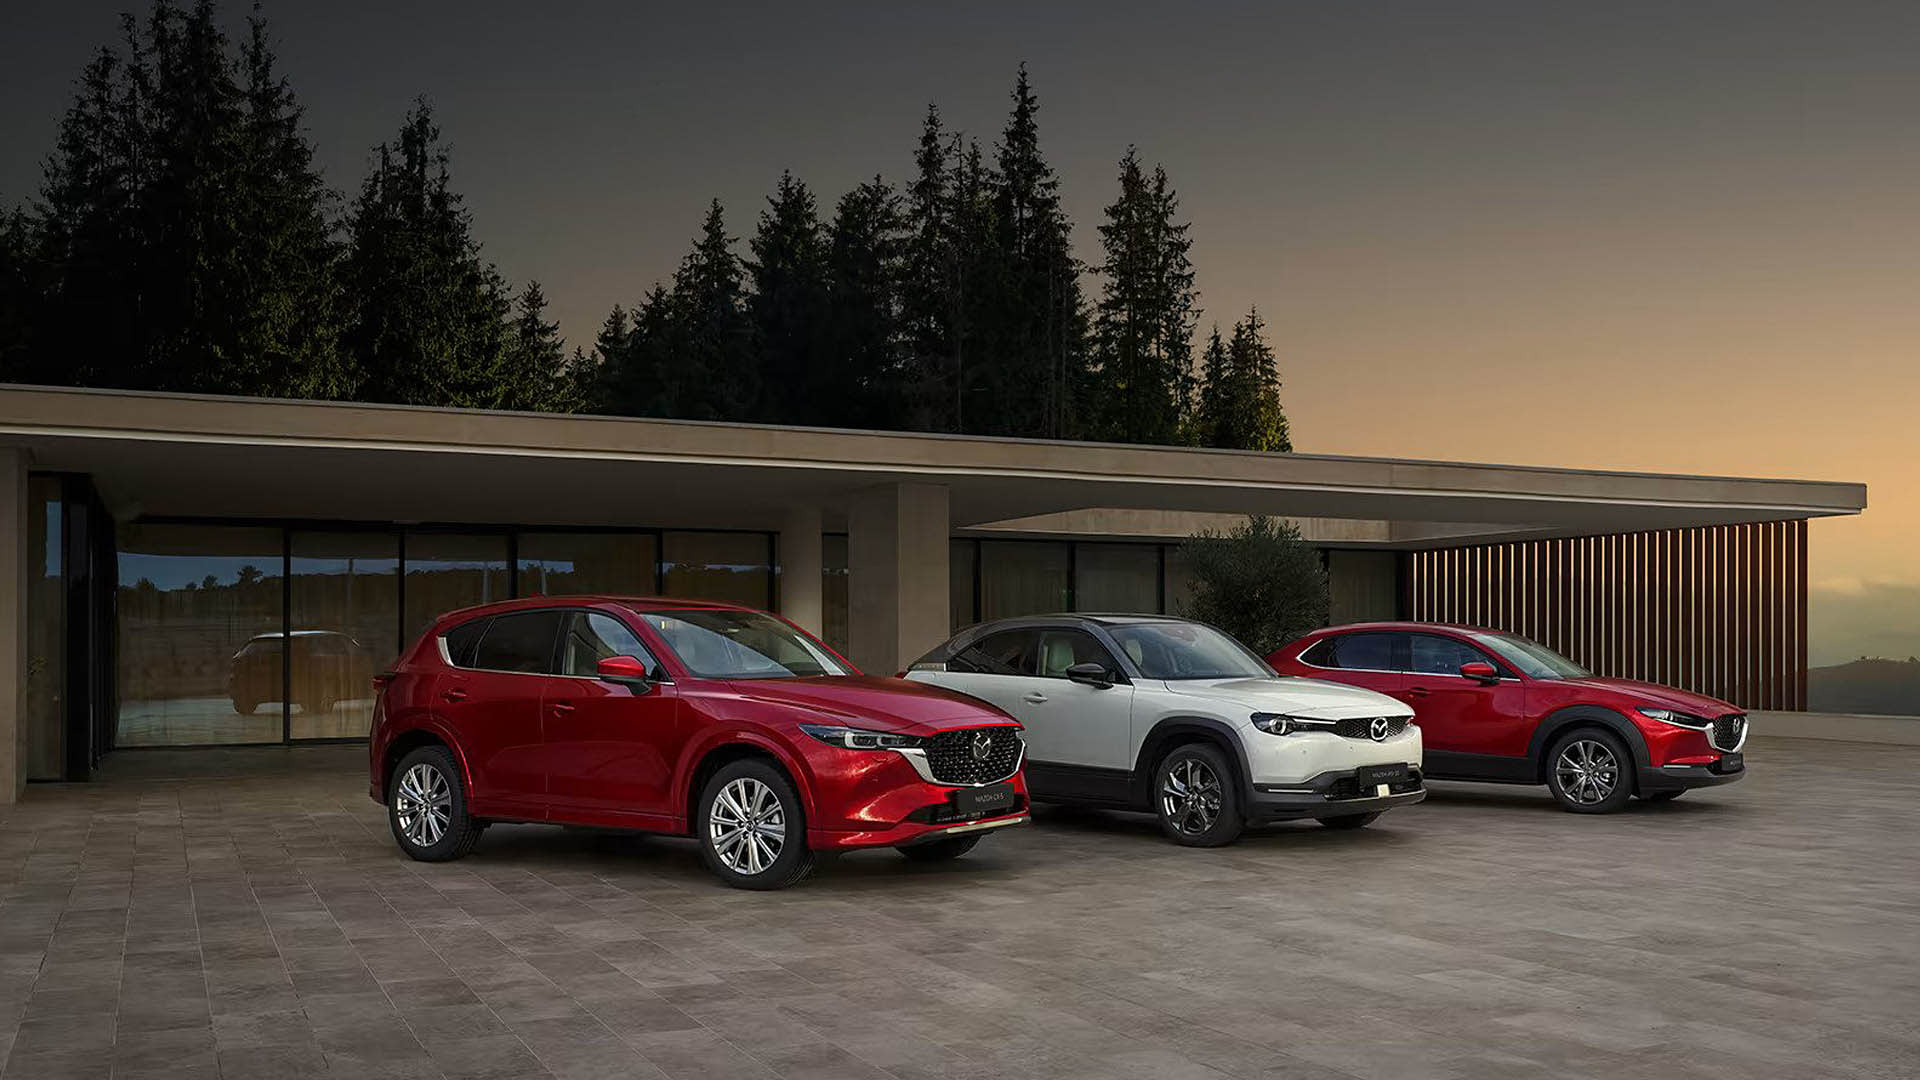 The Mazda SUV Range